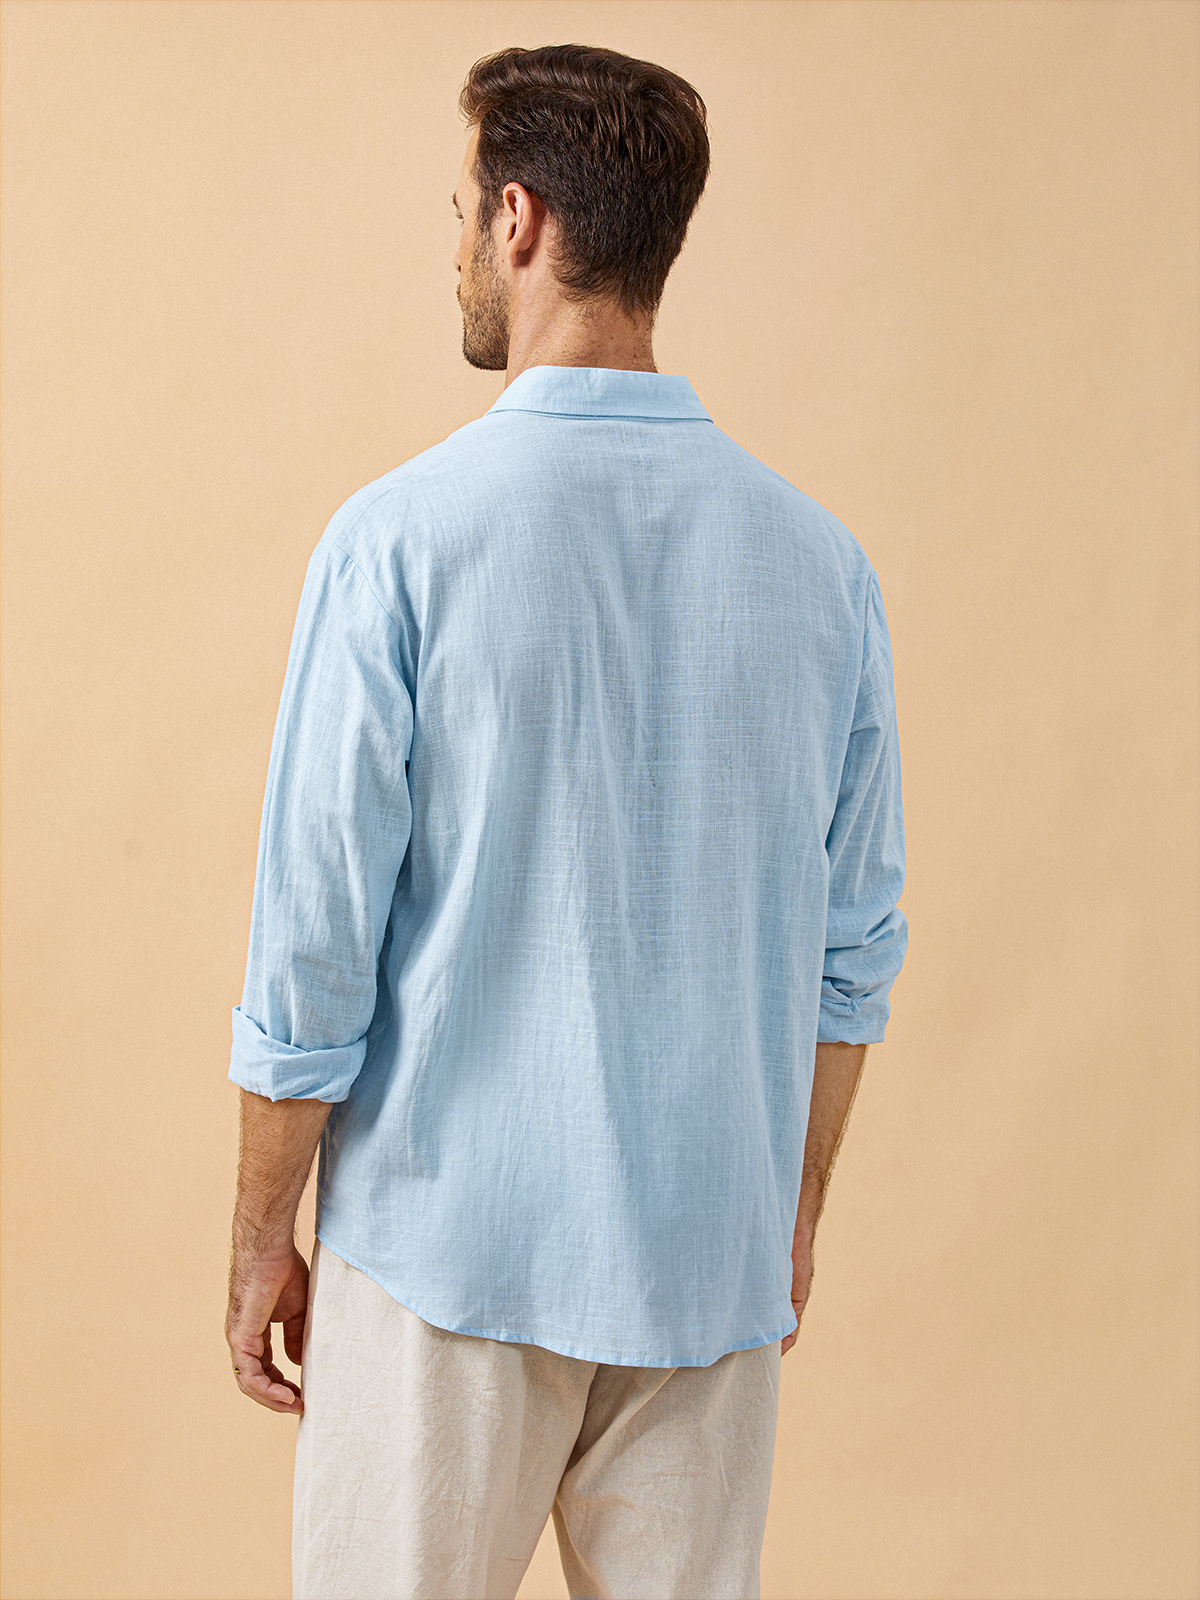 Cotton Linen Plain Chest Pocket Long Sleeve Casual Shirt